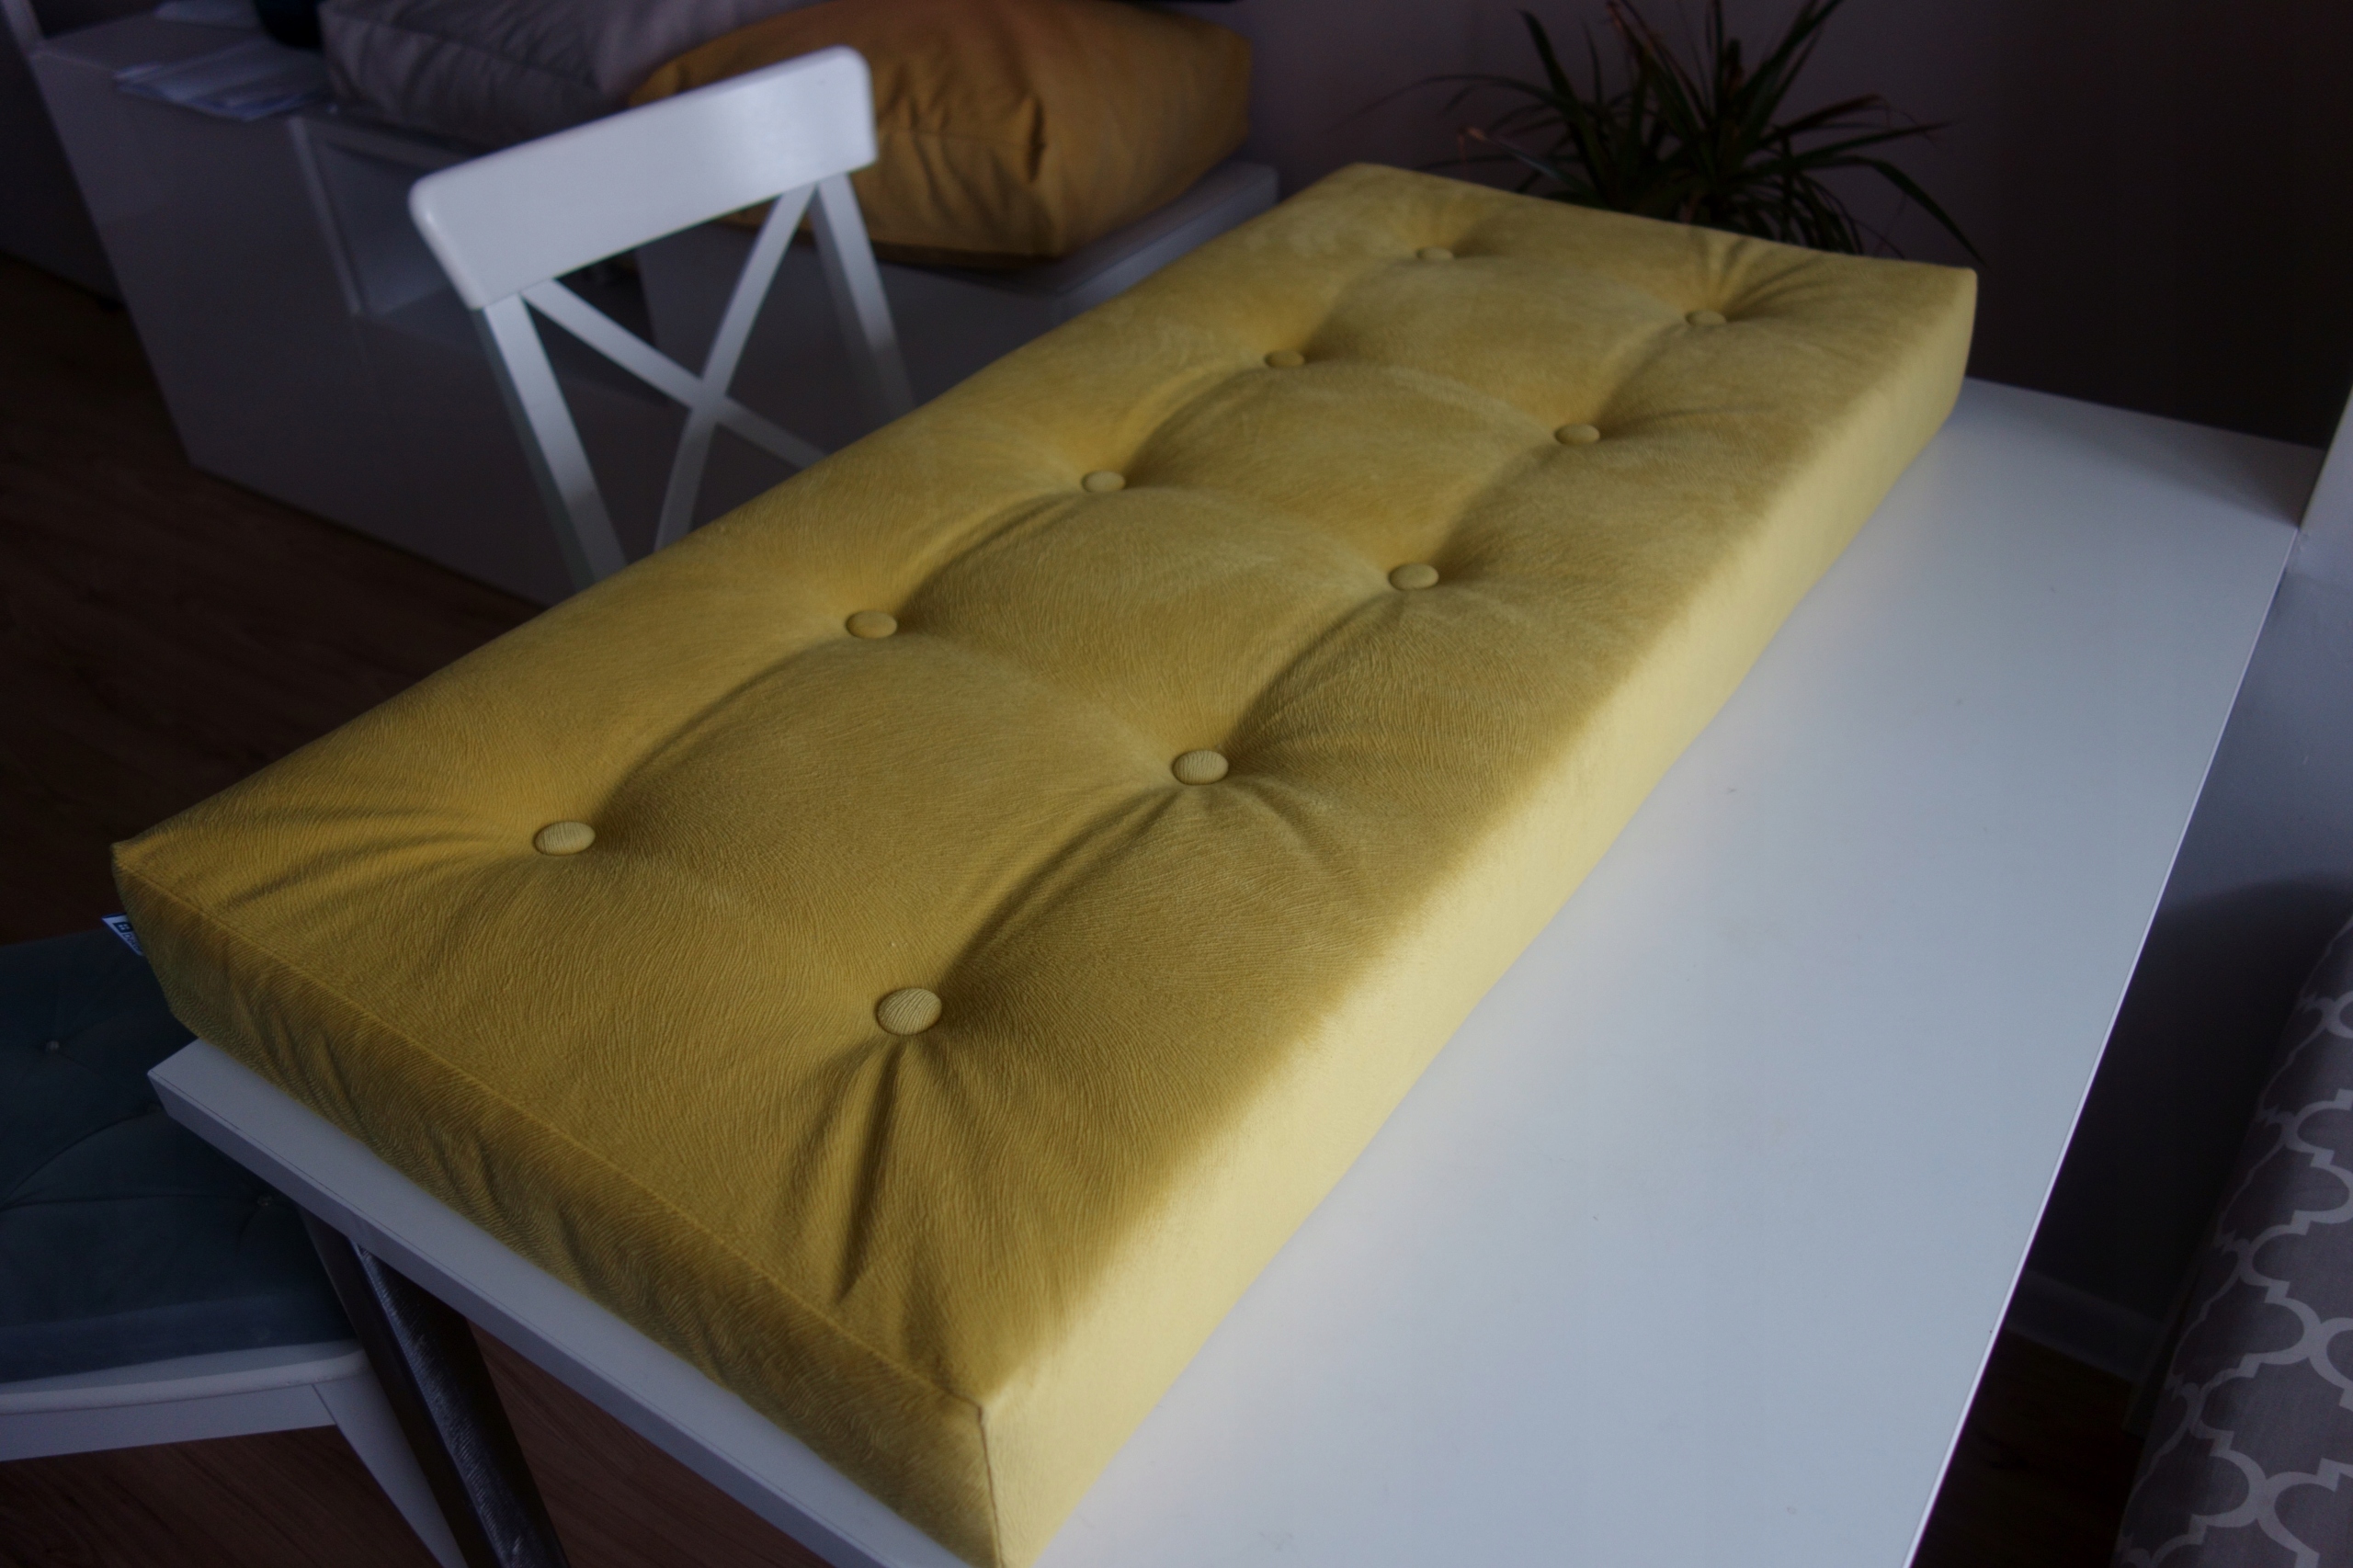 подушки из экокожи для дивана